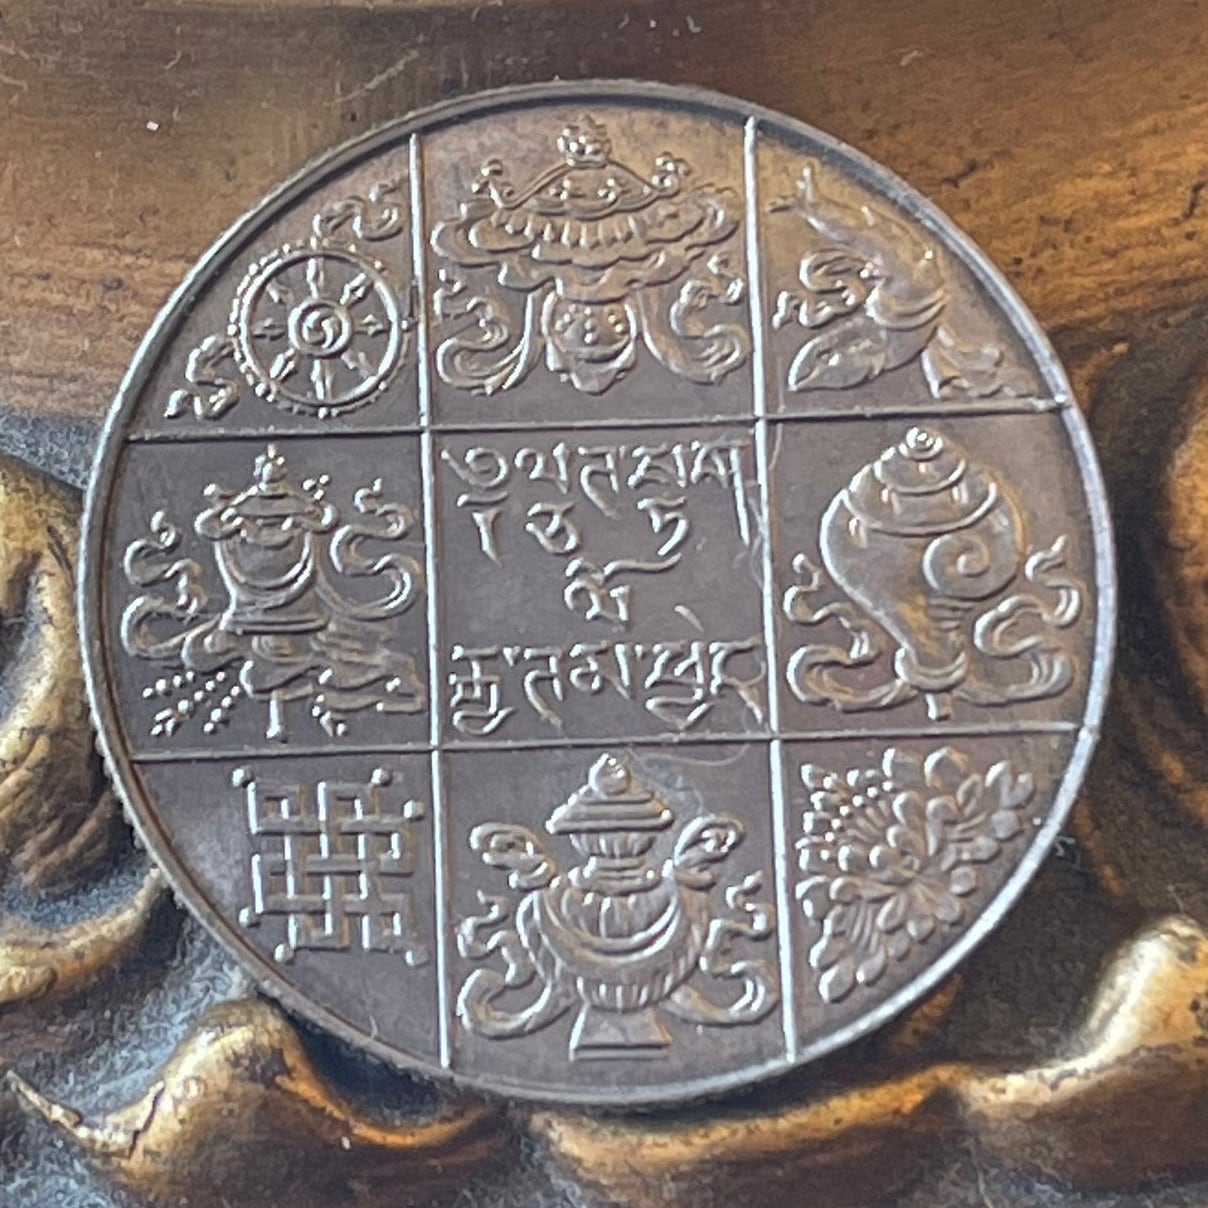 Buddha Symbols & King Jigme Dorji Wangchuck 1/2 Rupee Bhutan Authentic Coin Money for Jewelry and Craft Making